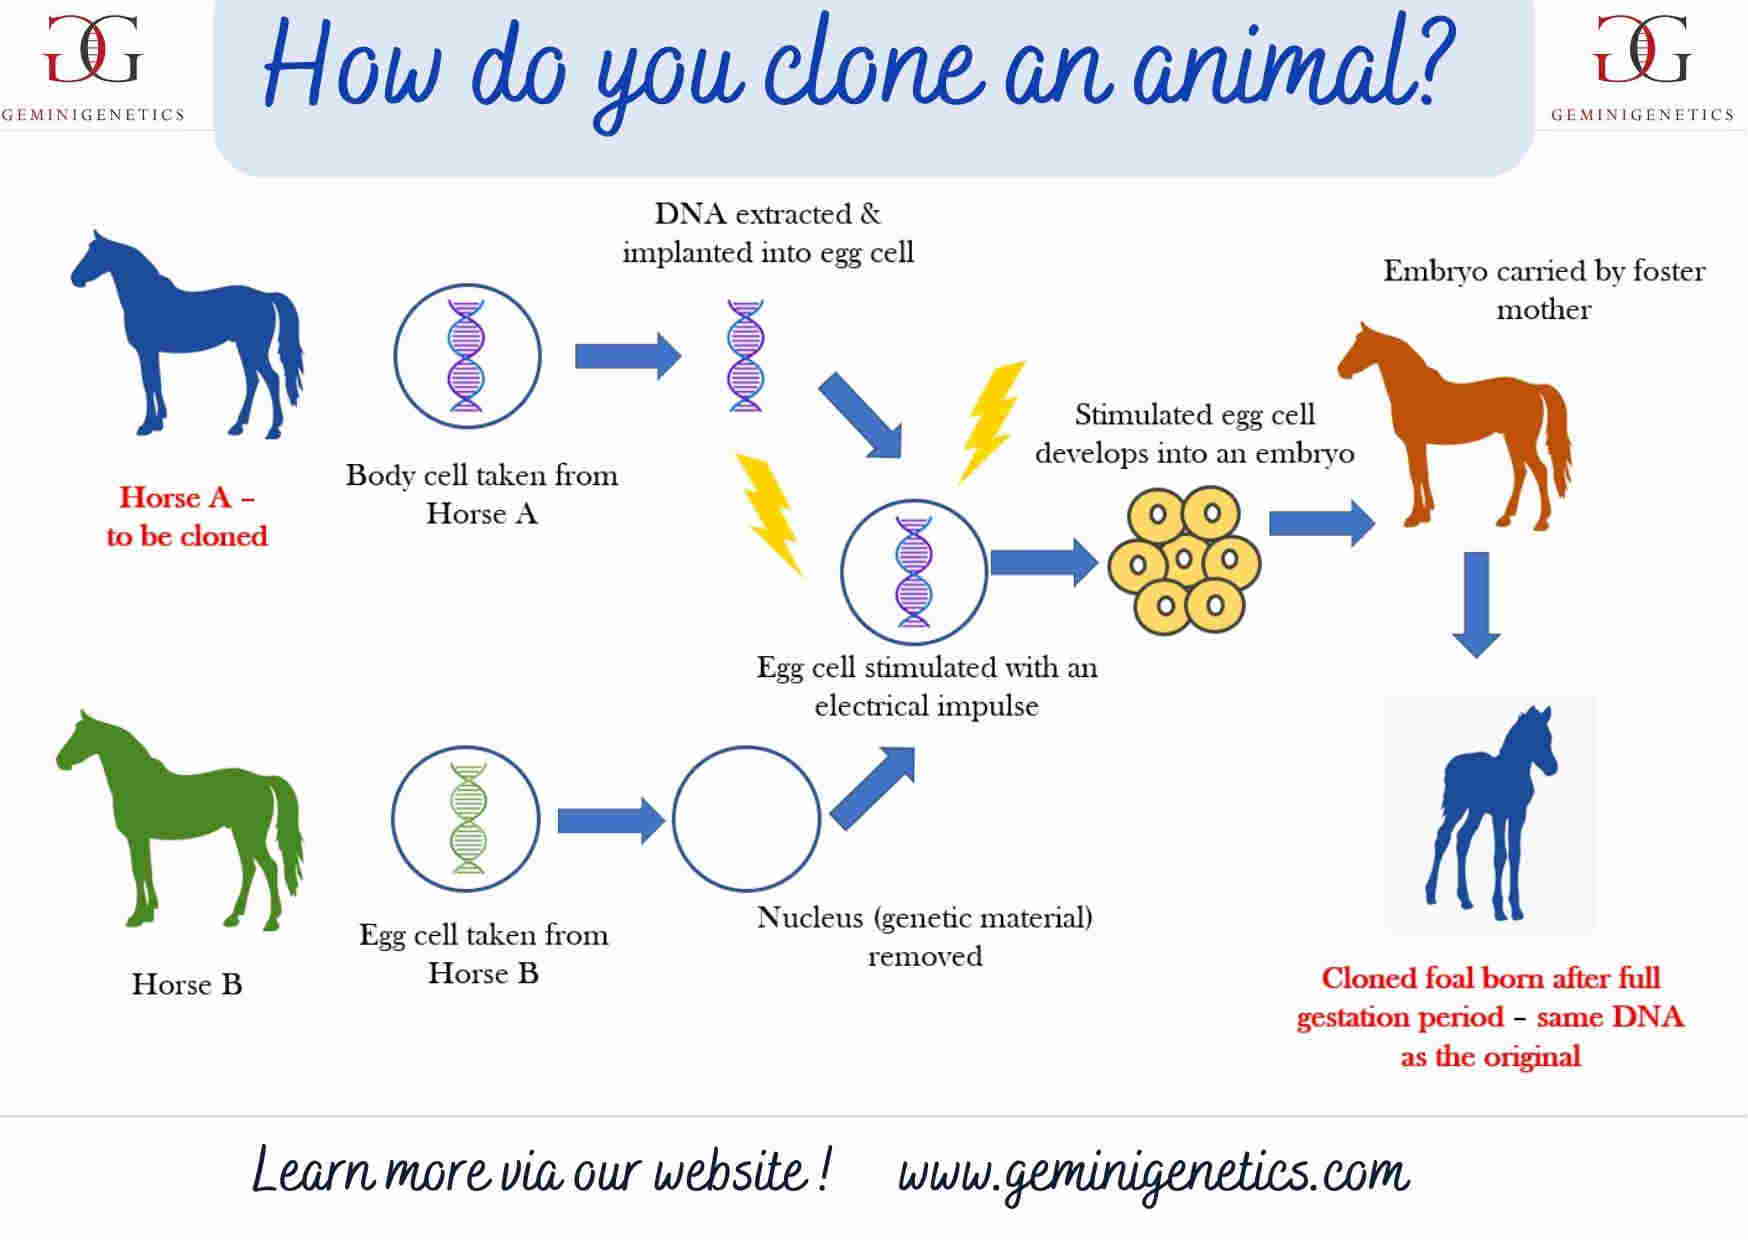 How Do You Clone an Animal? | Gemini Genetics